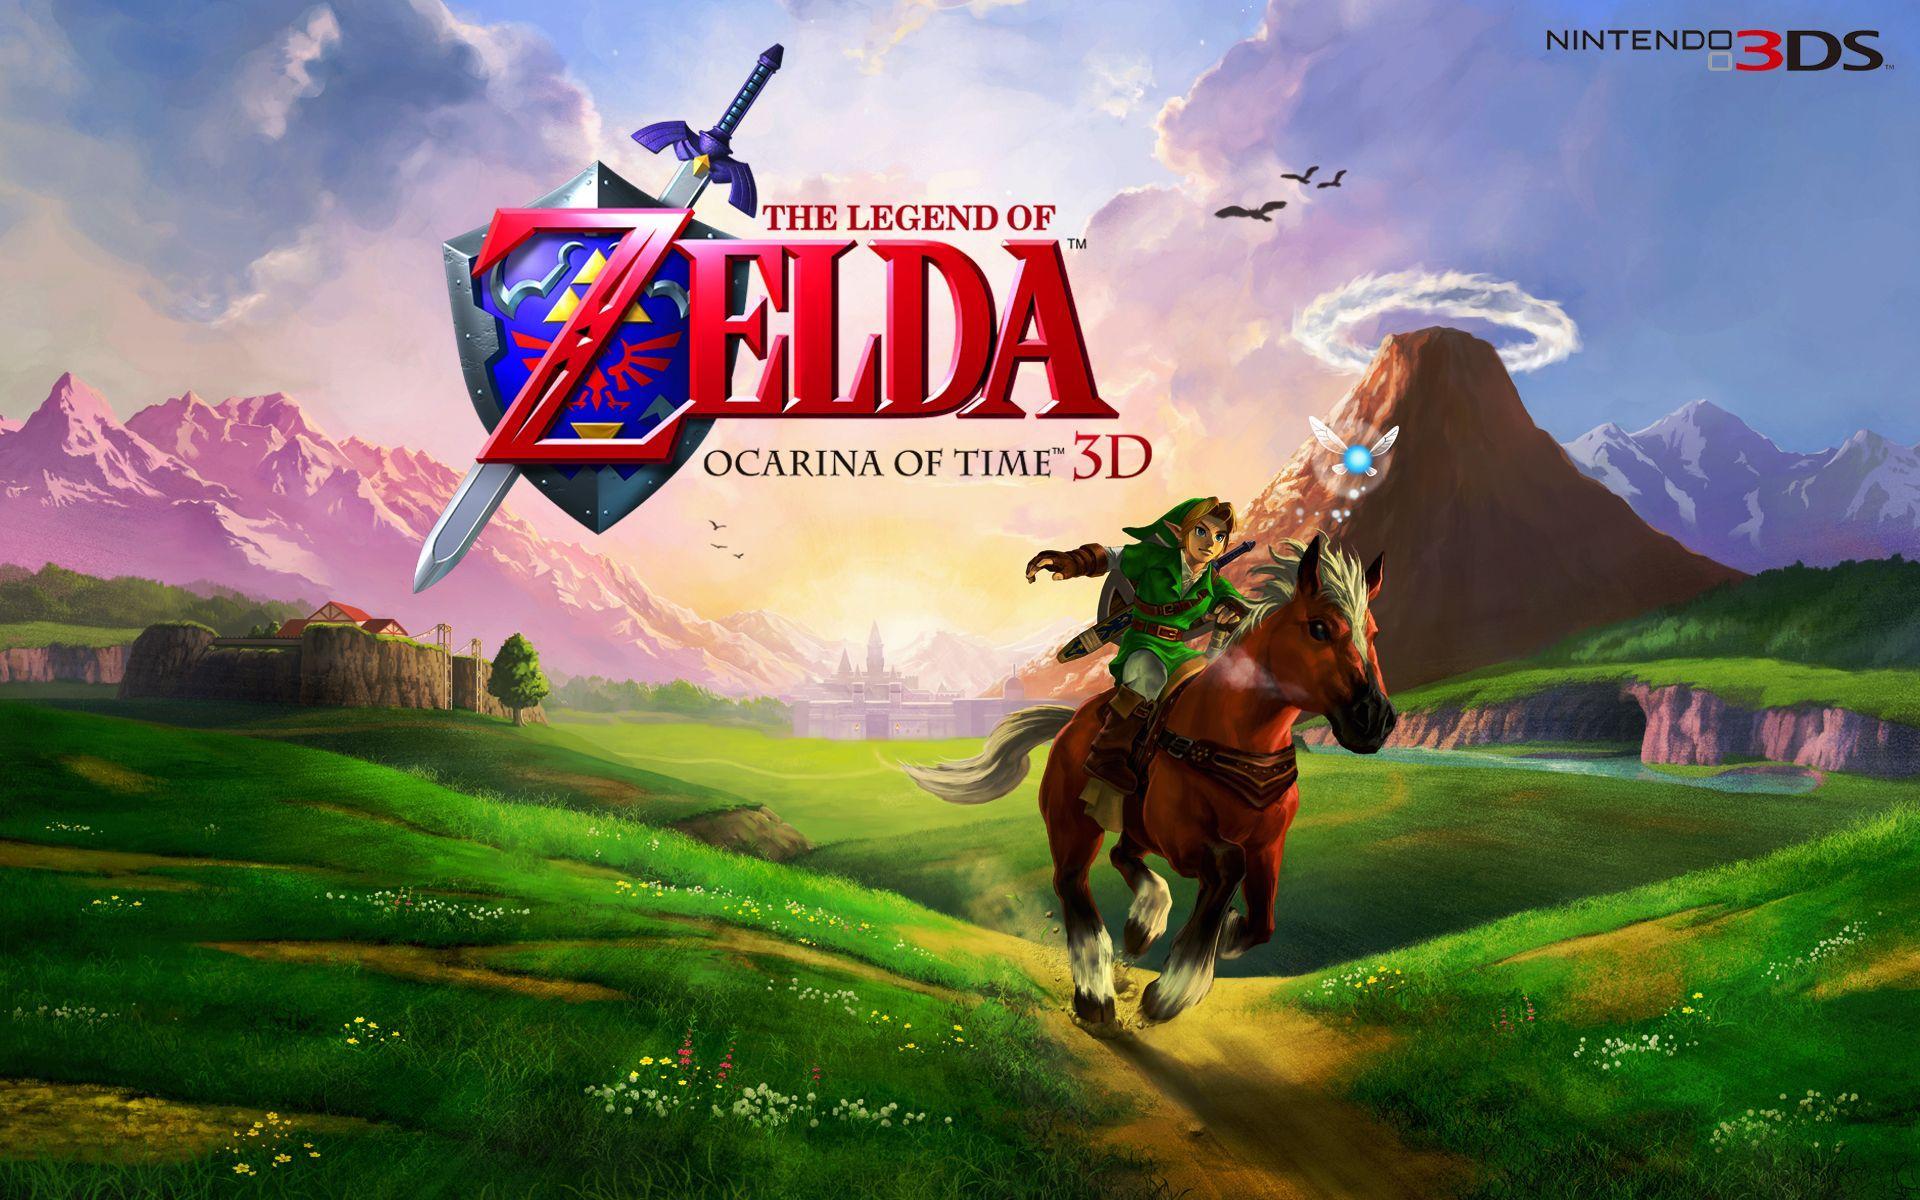 Zelda HD The Legend Of Zelda Ocarina Of Time Wallpapers  HD Wallpapers   ID 64249